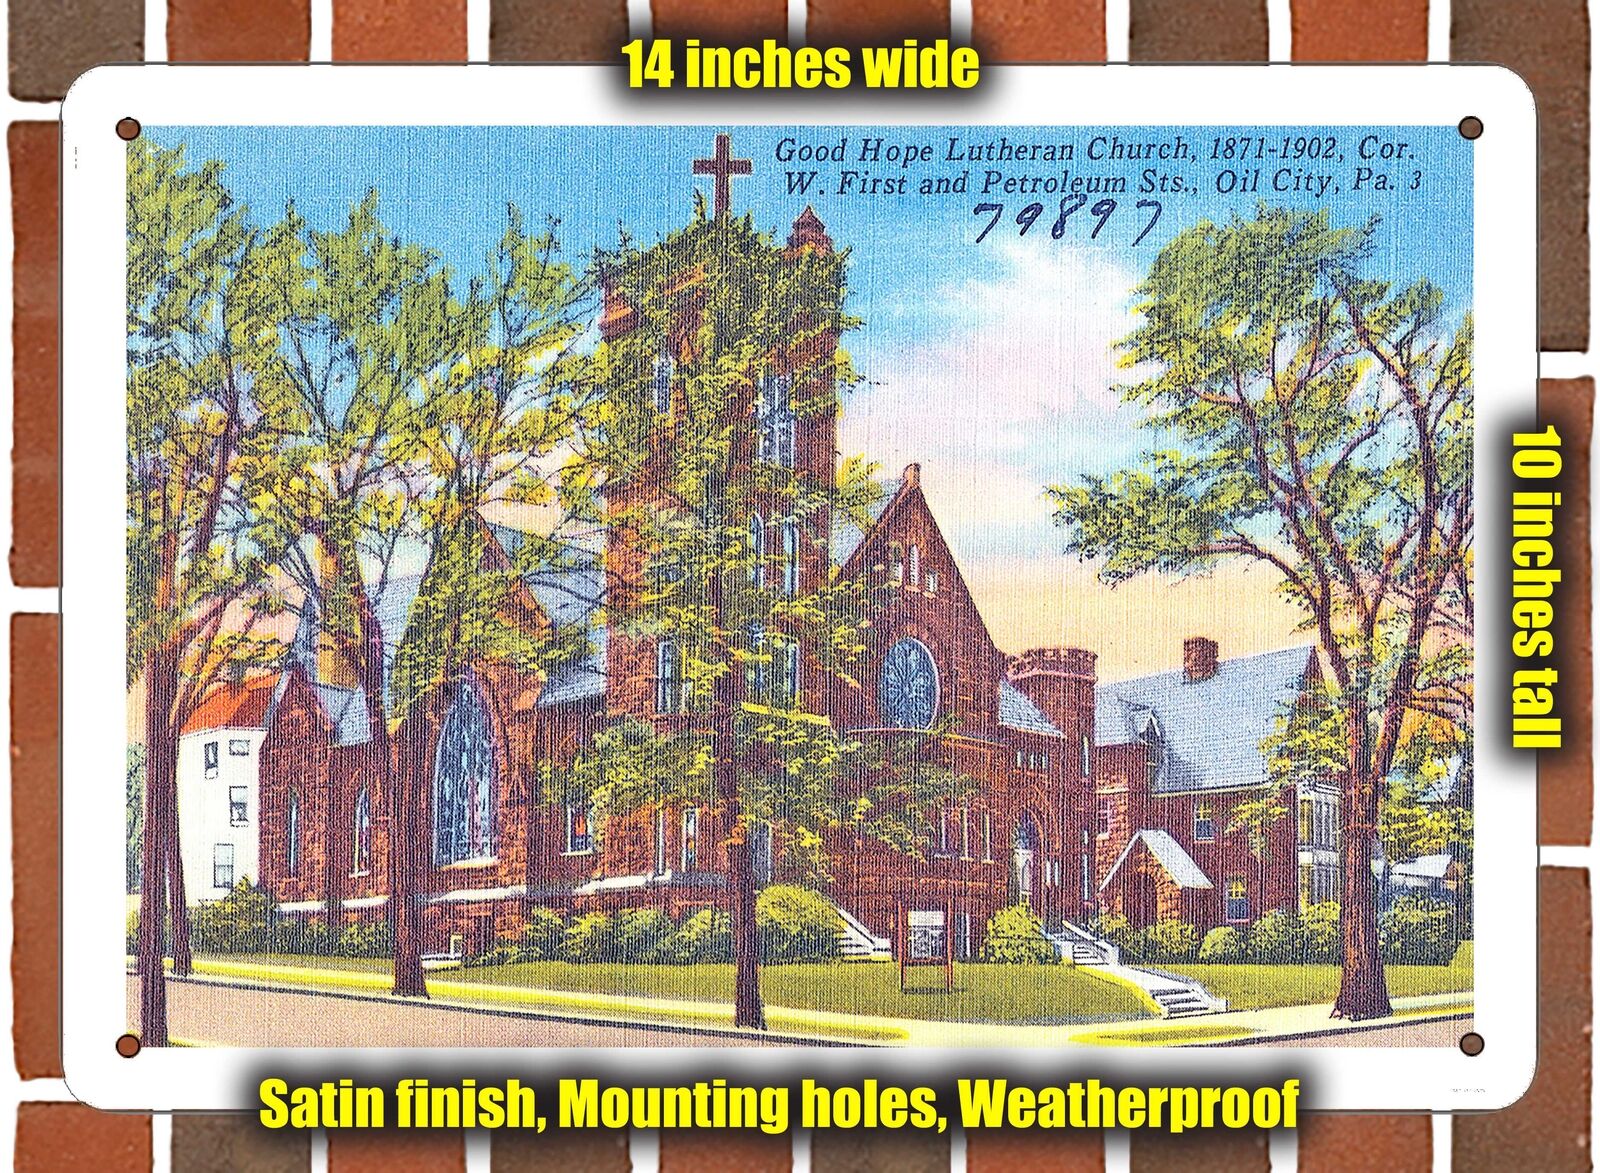 METAL SIGN - Pennsylvania Postcard - Good Hope Lutheran Church, 1871 - 1902, Co